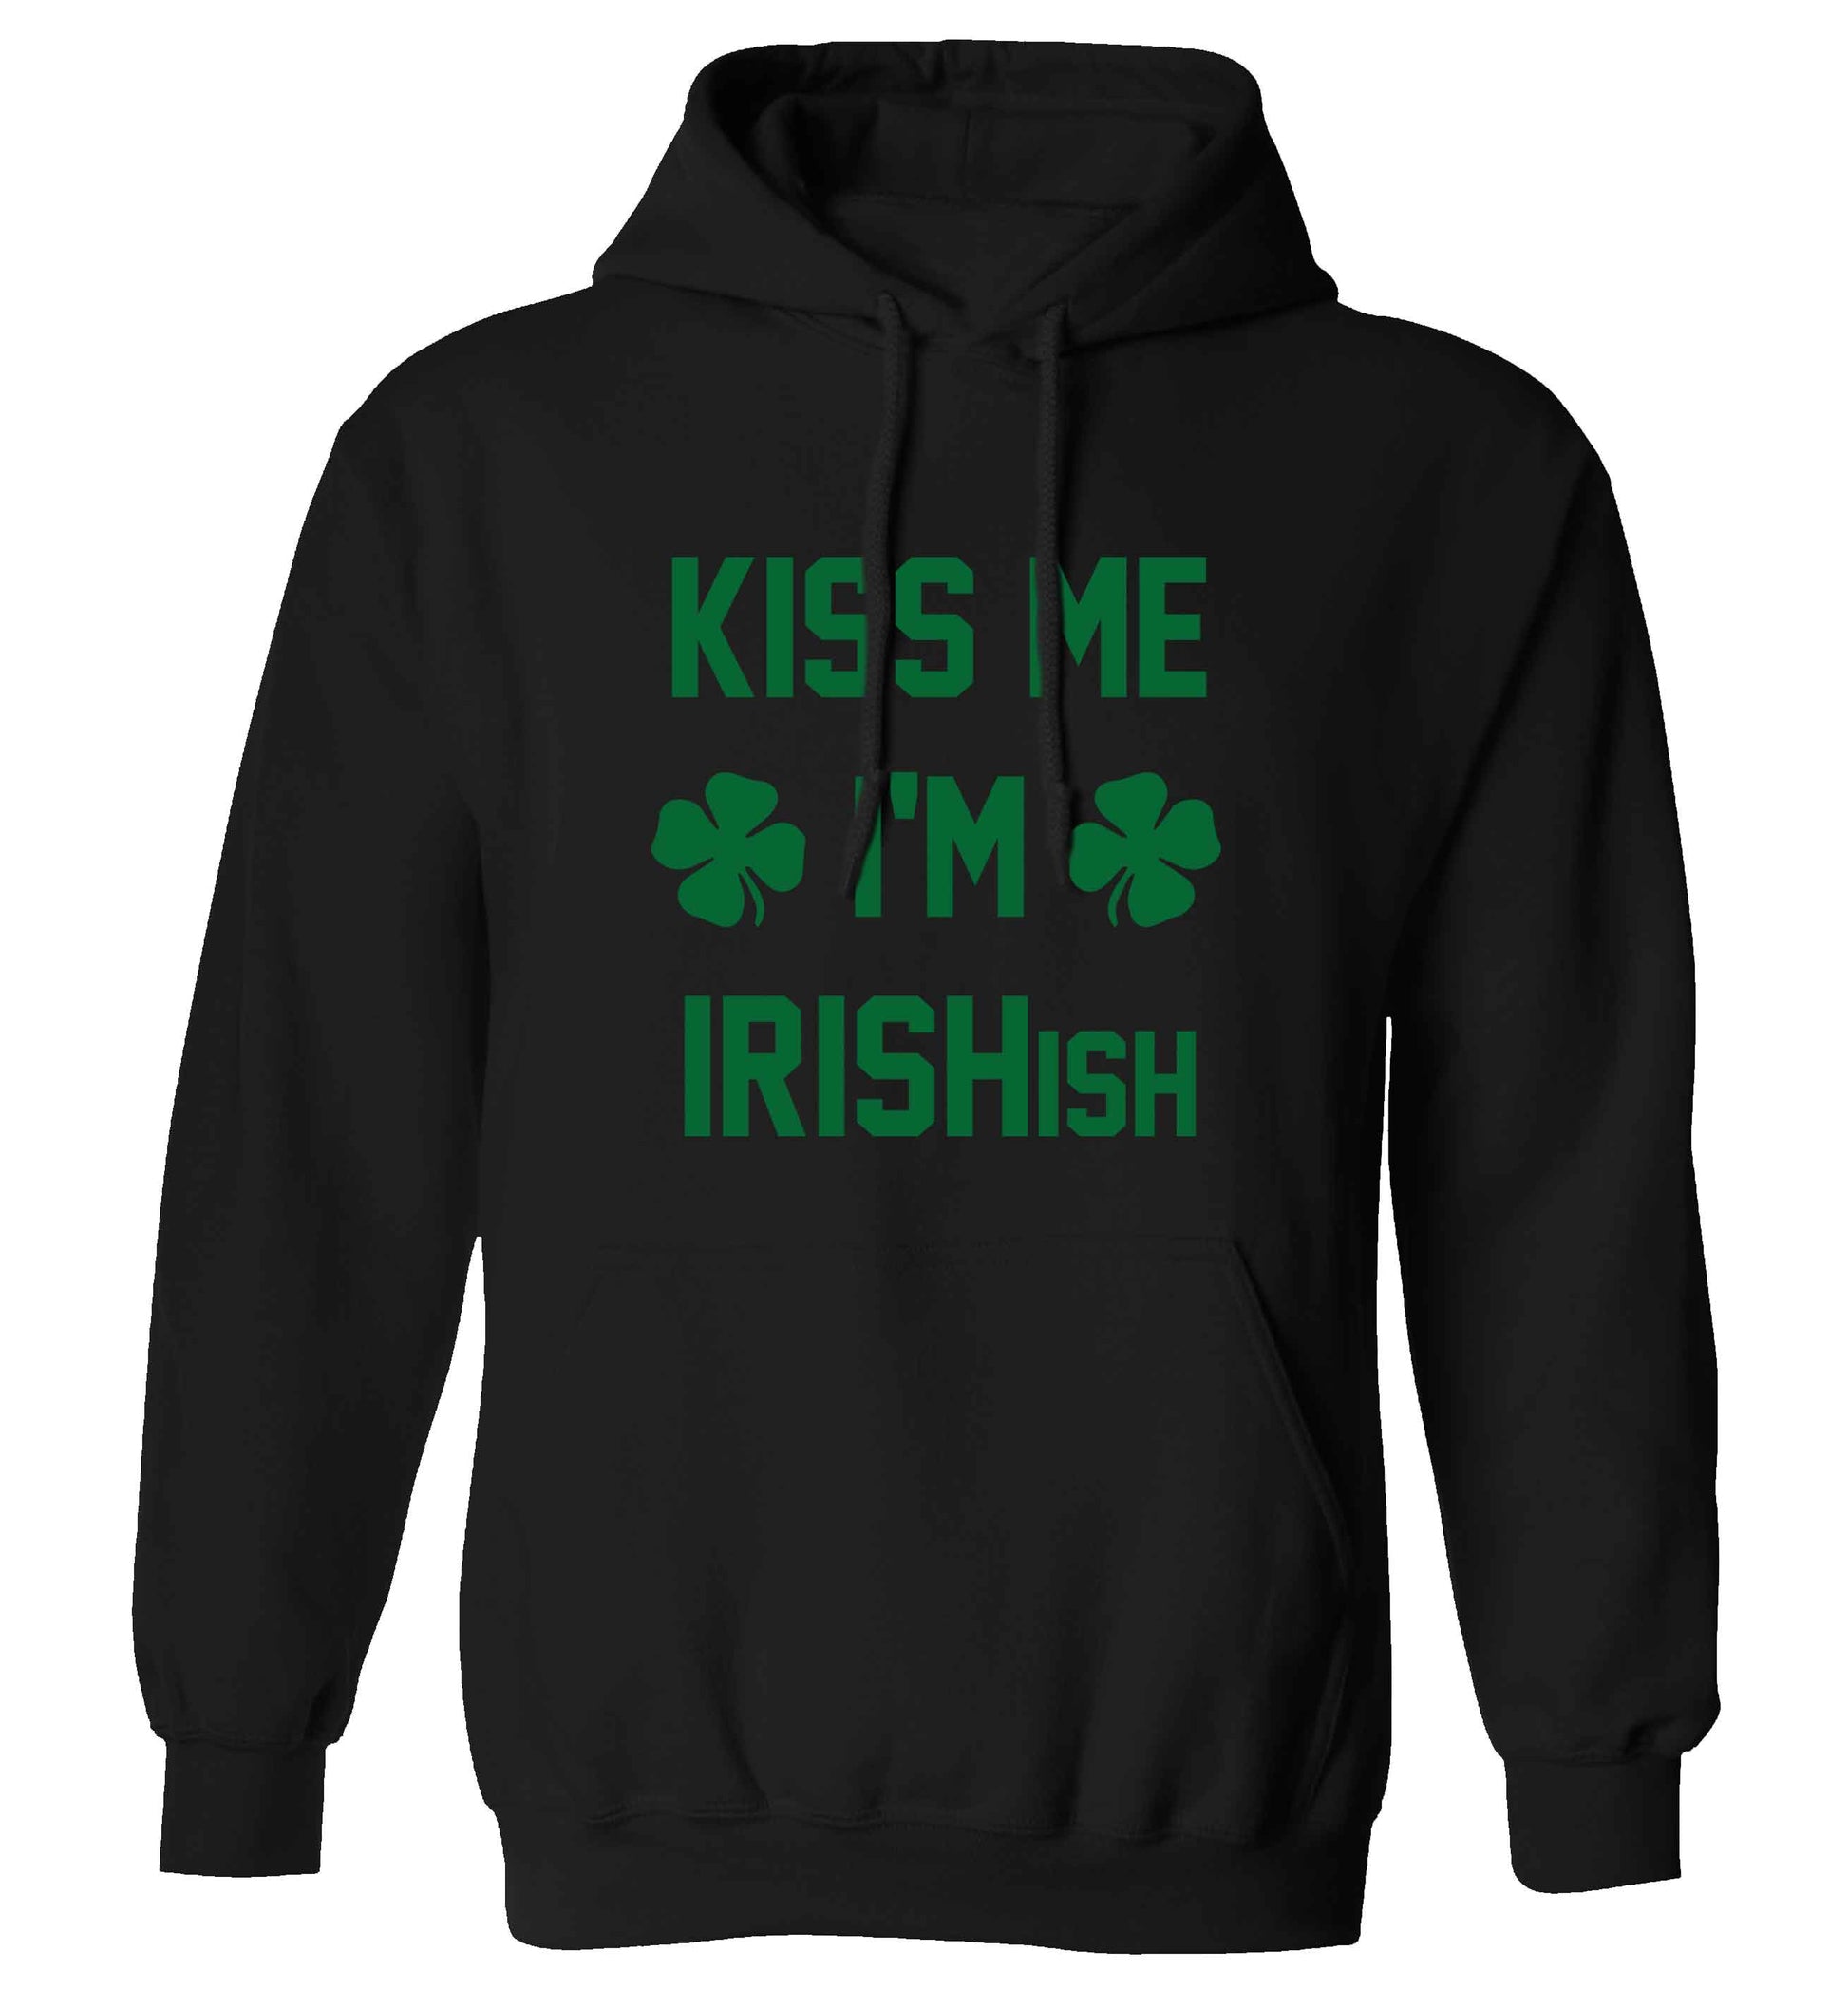 Kiss me I'm Irishish adults unisex black hoodie 2XL